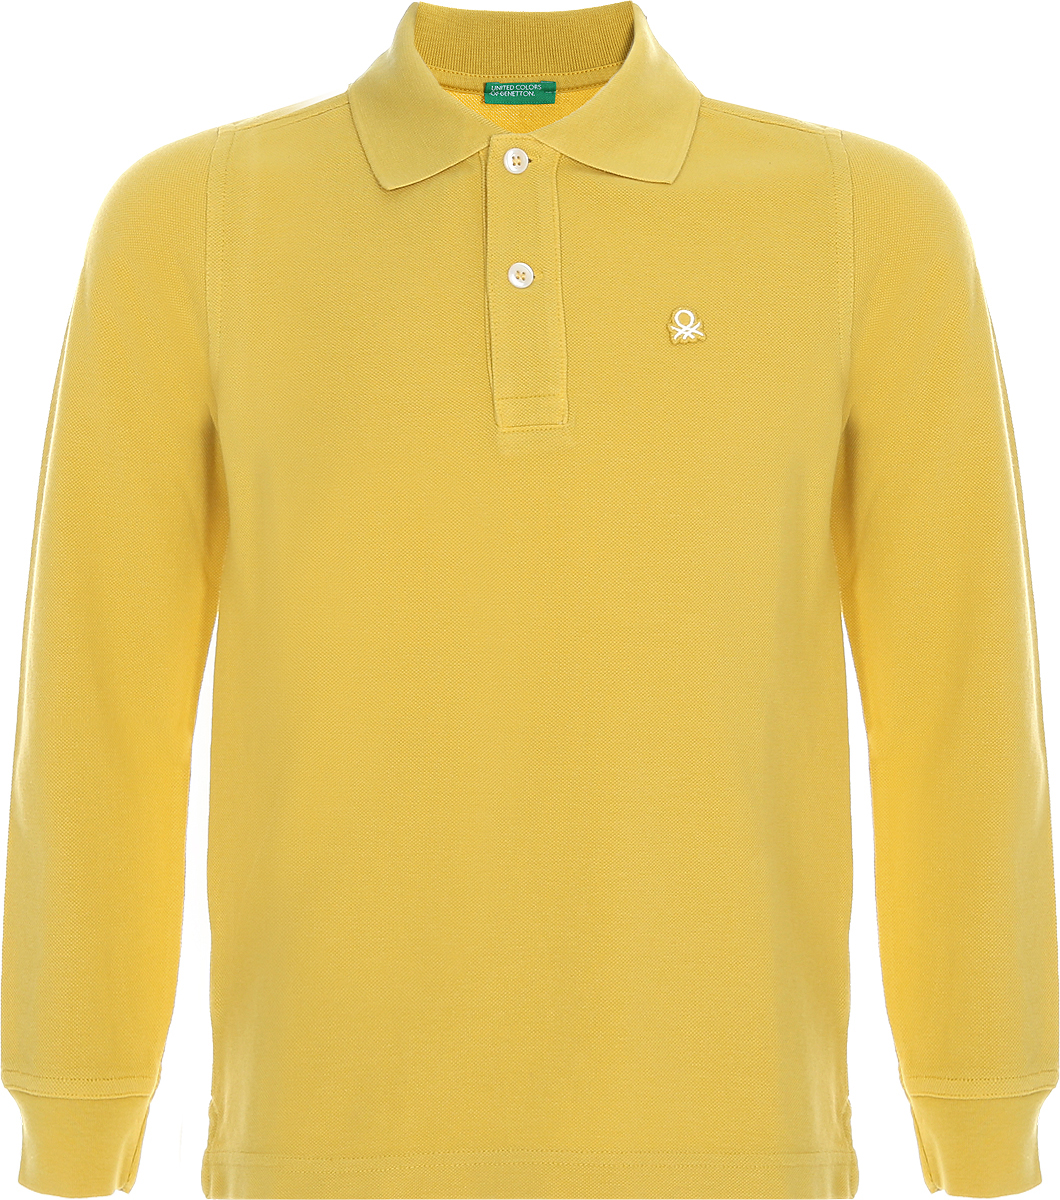 Кофта для мальчика United Colors of Benetton, цвет: желтый. 3089C3090_36H. Размер 130